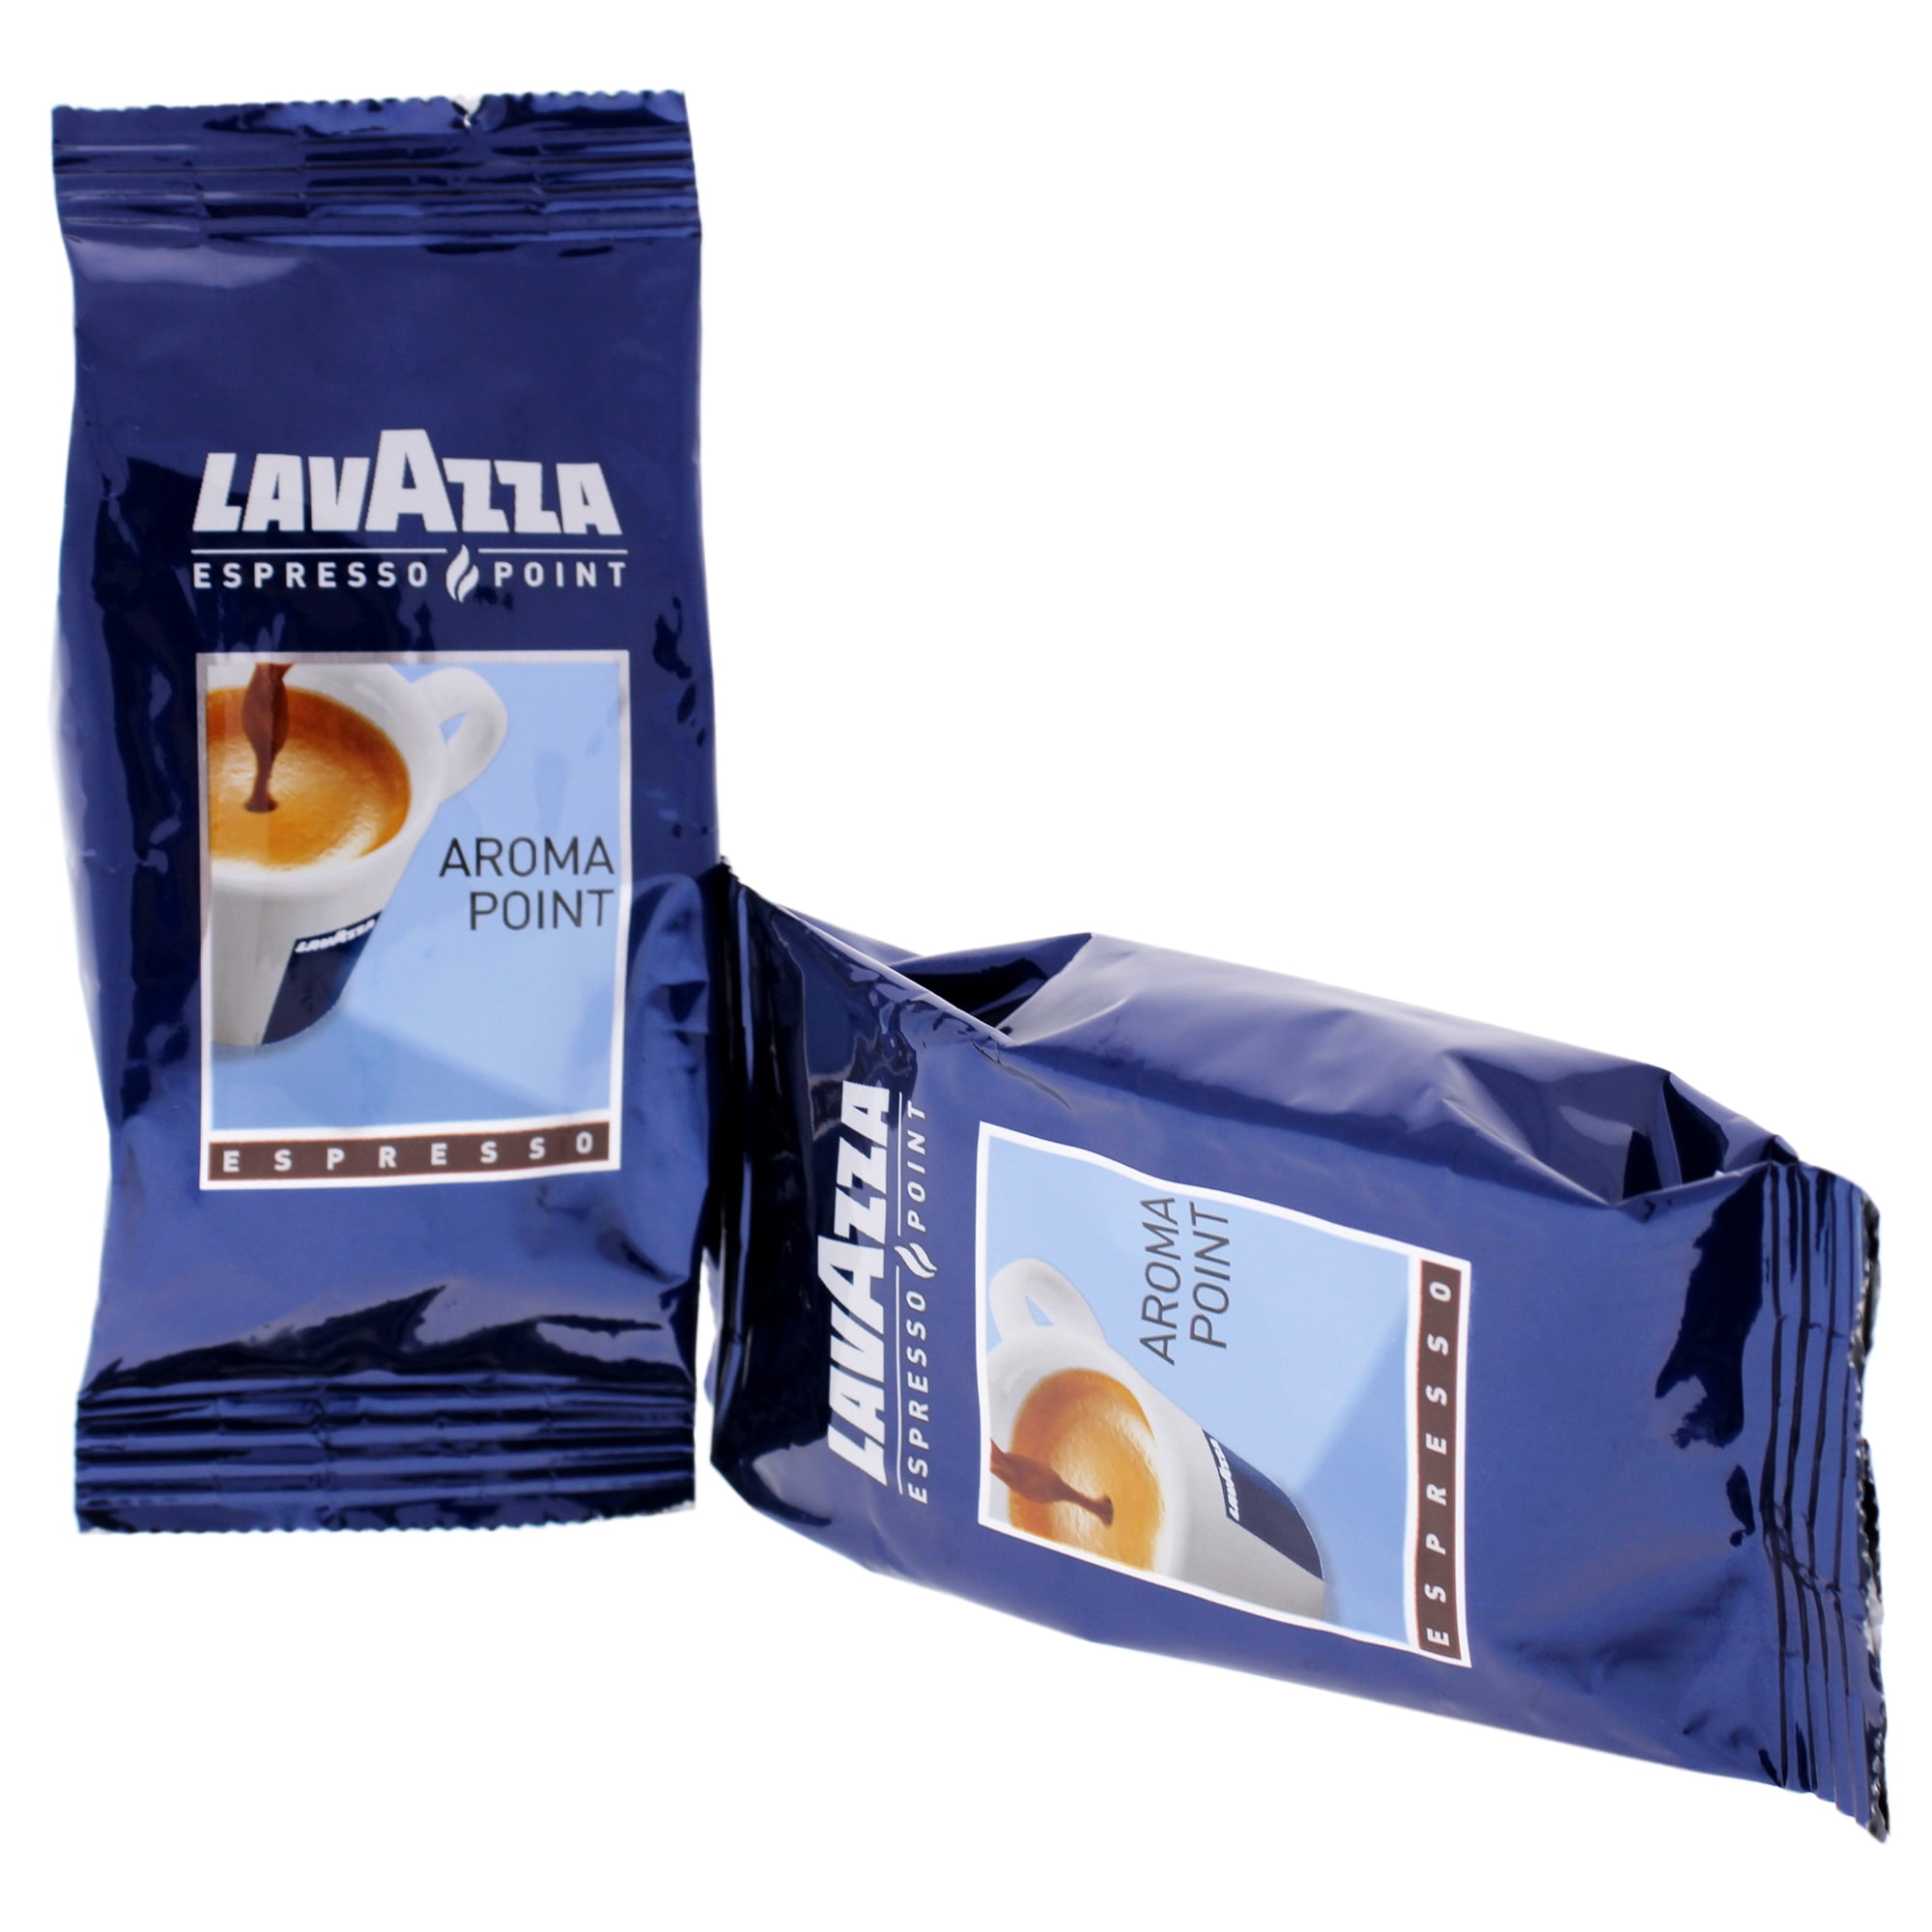 Lavazza Espresso Point Aroma Point Coffee